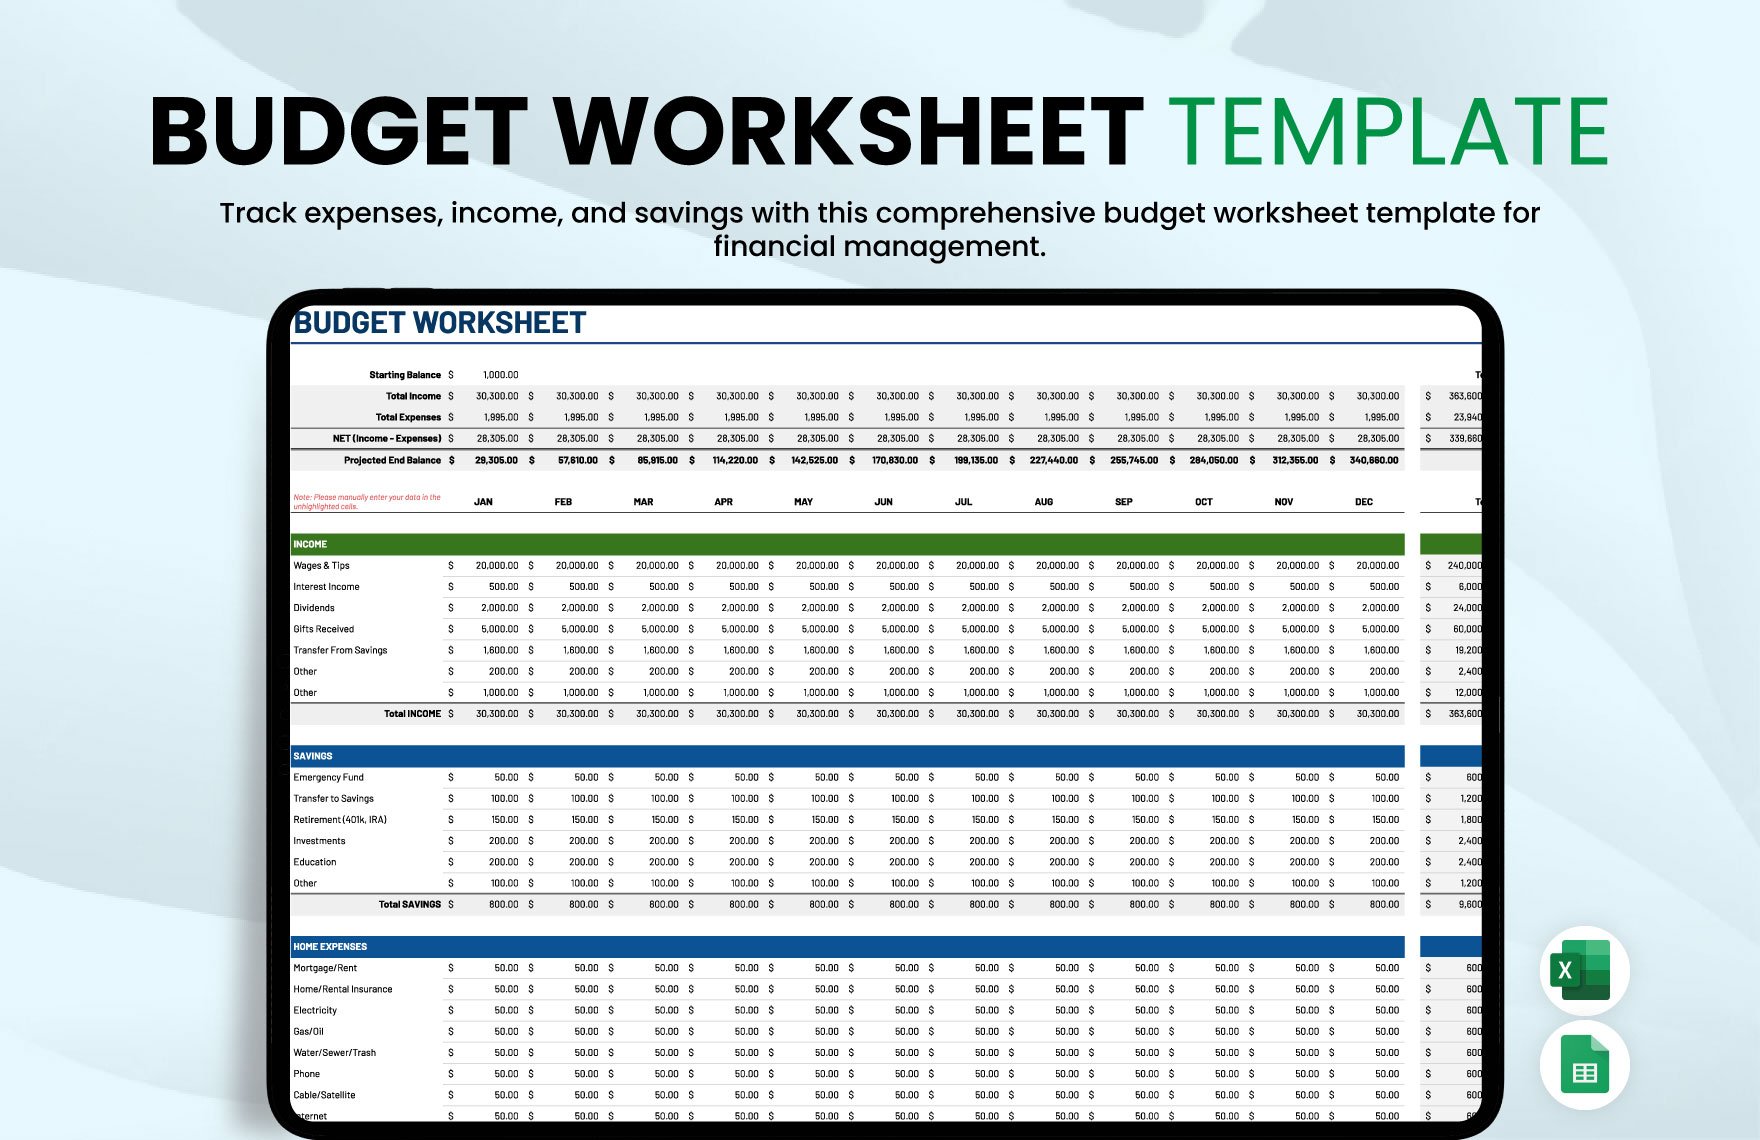 Budget Worksheet Template in Excel, Google Sheets